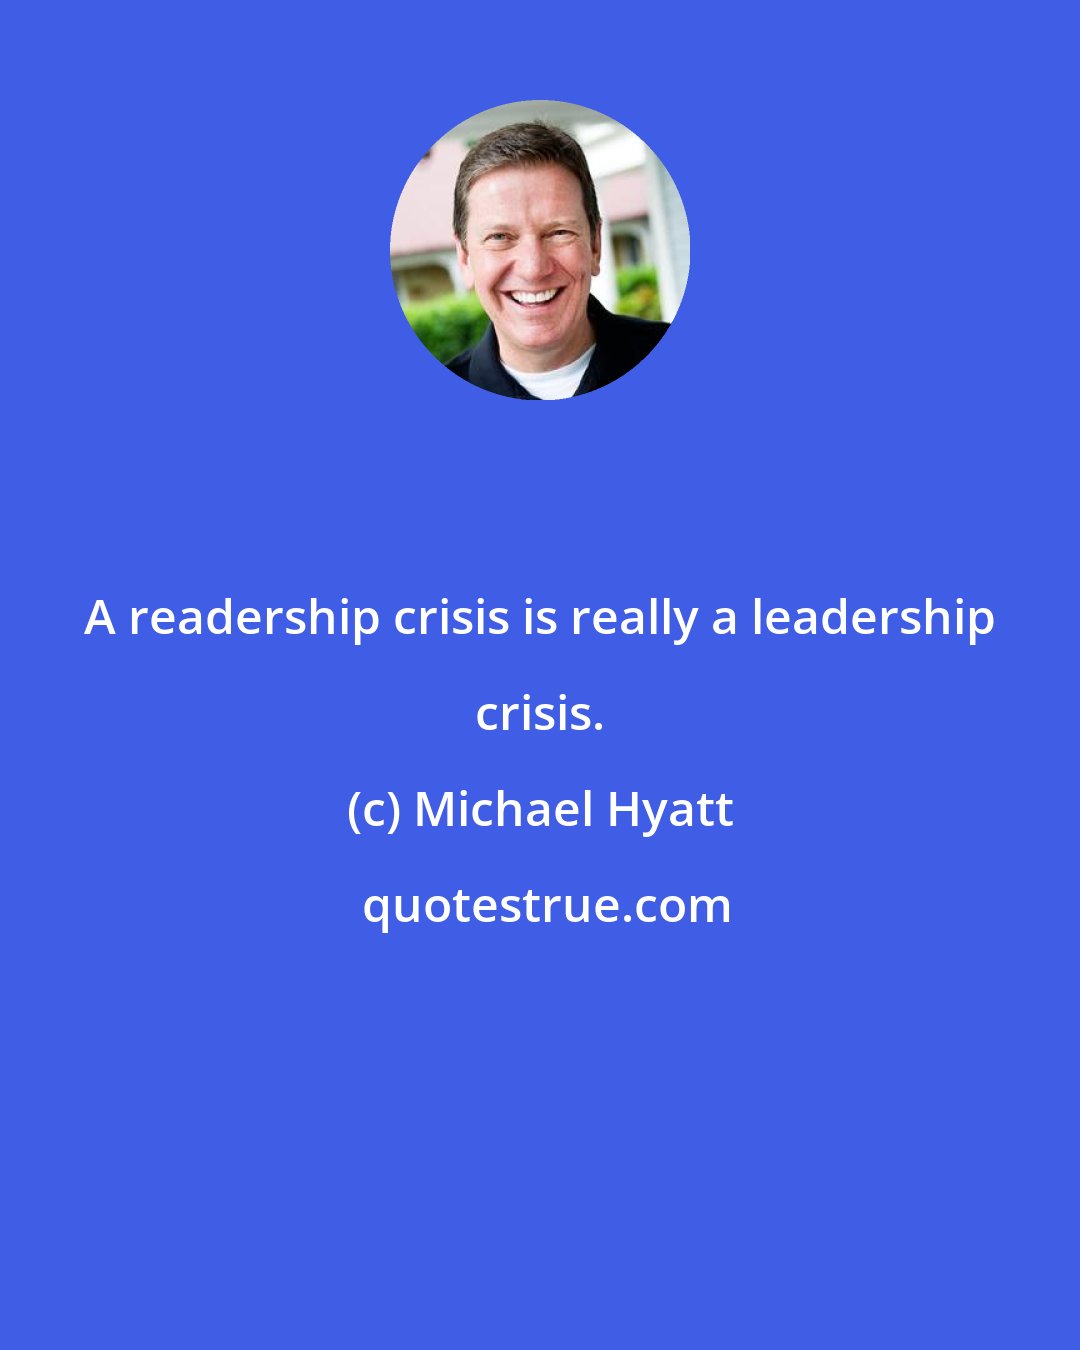 Michael Hyatt: A readership crisis is really a leadership crisis.